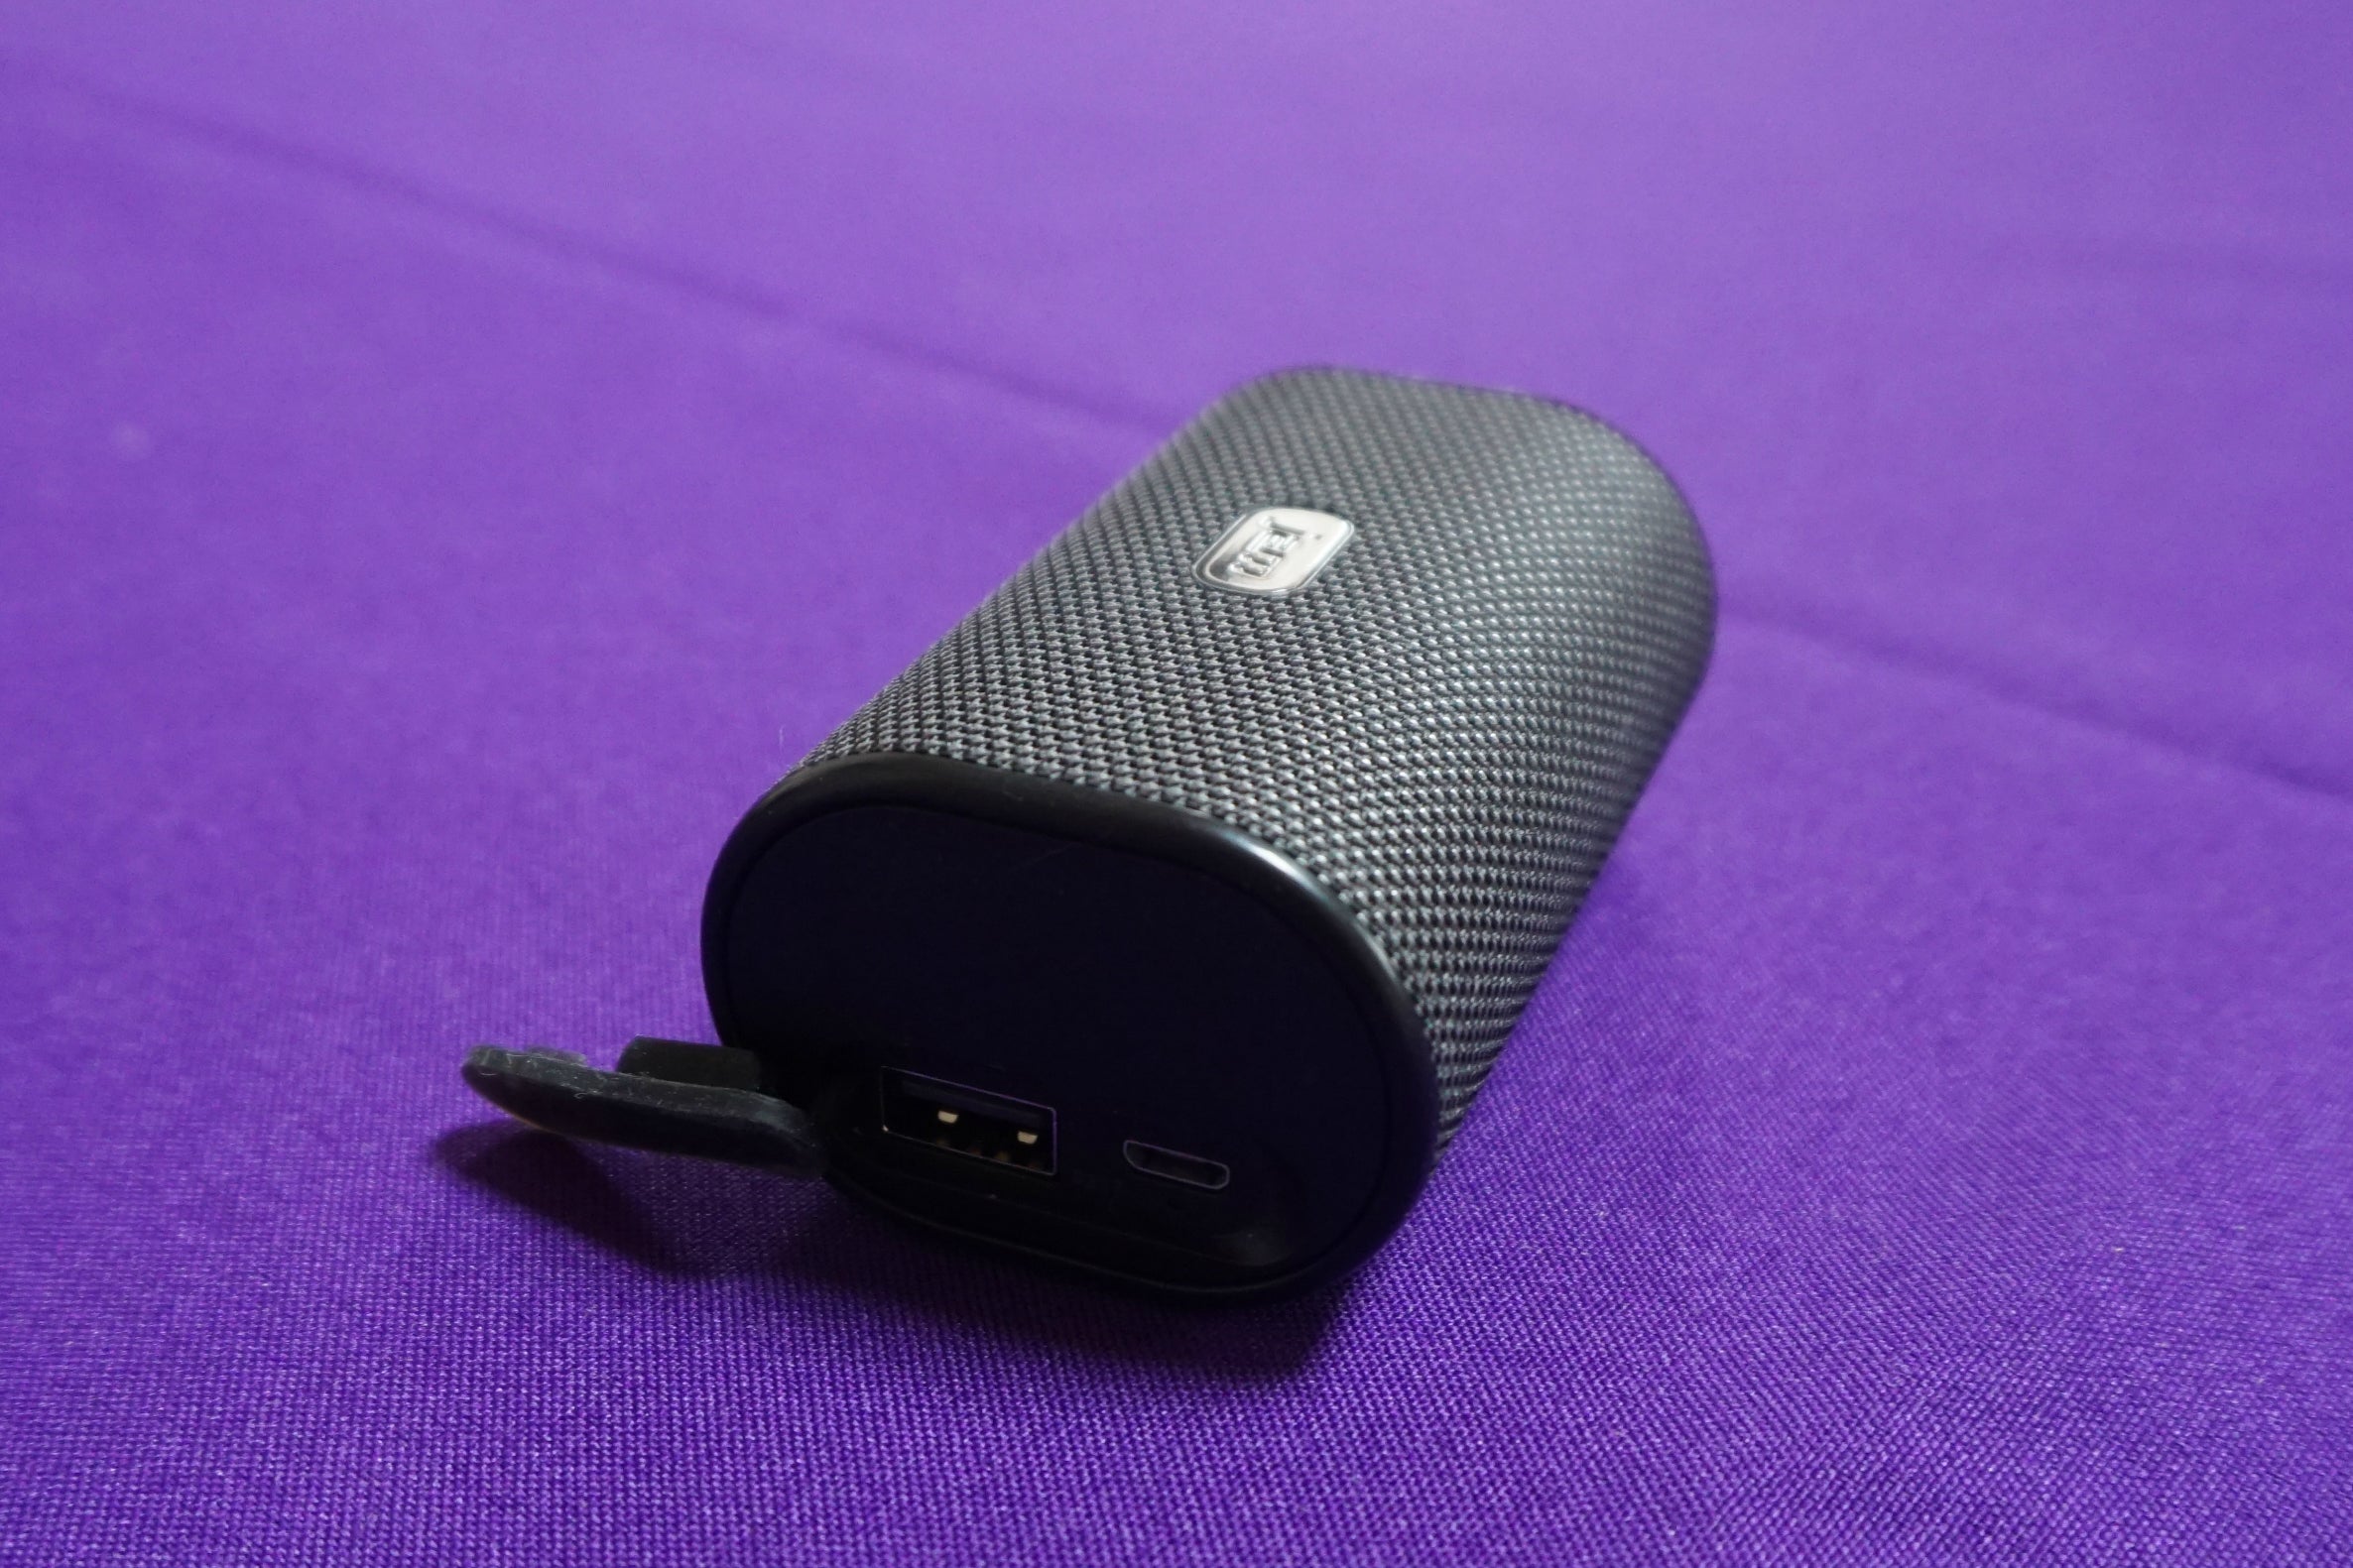 Black Jam Ultra wireless speaker on purple background